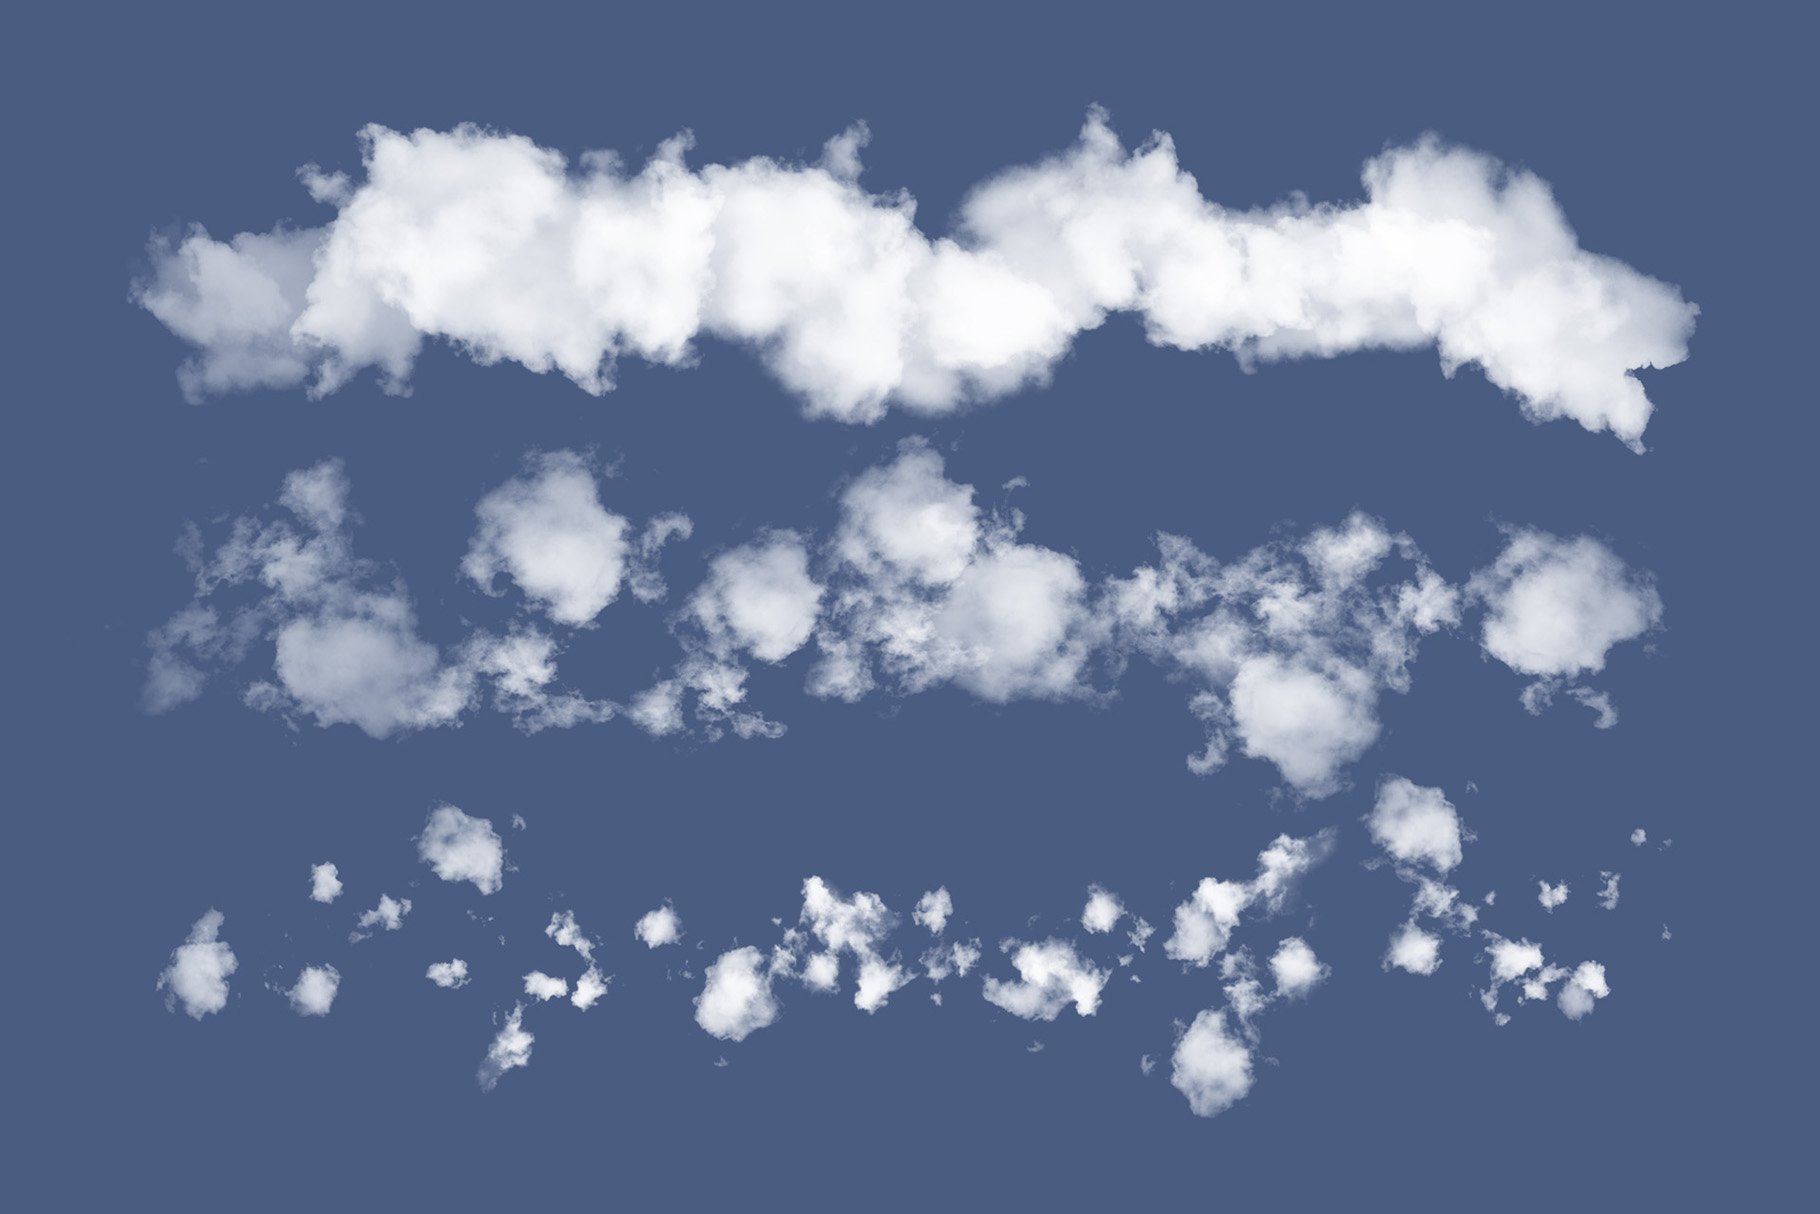 Cloud Bundlepreview image.